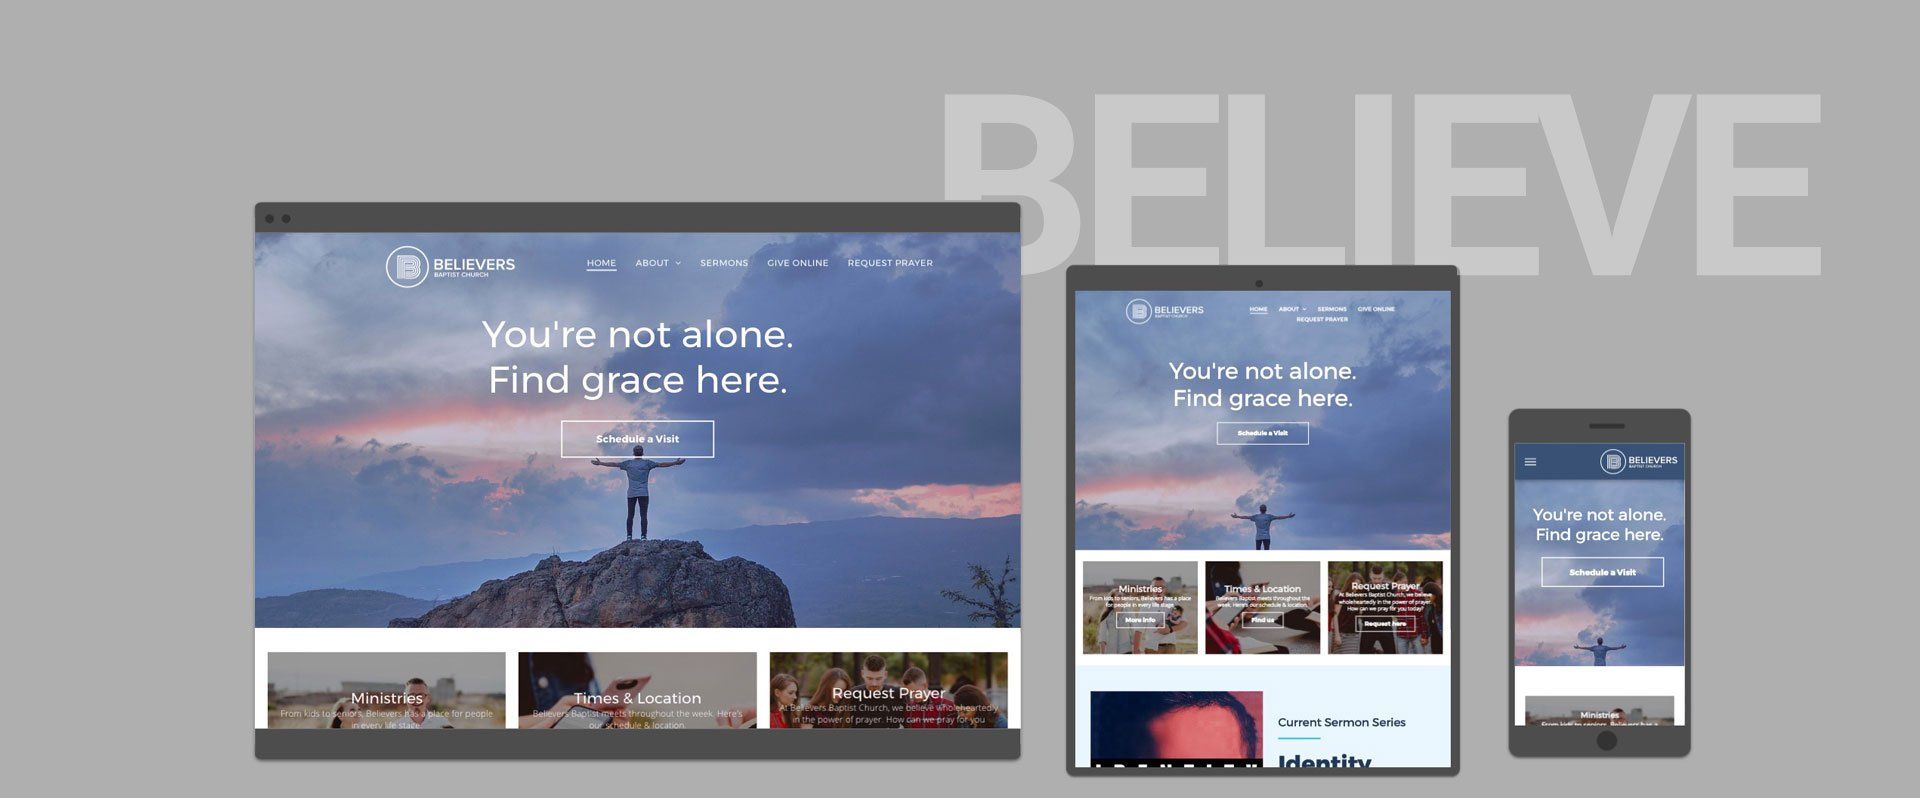 spirelight web believe church website template